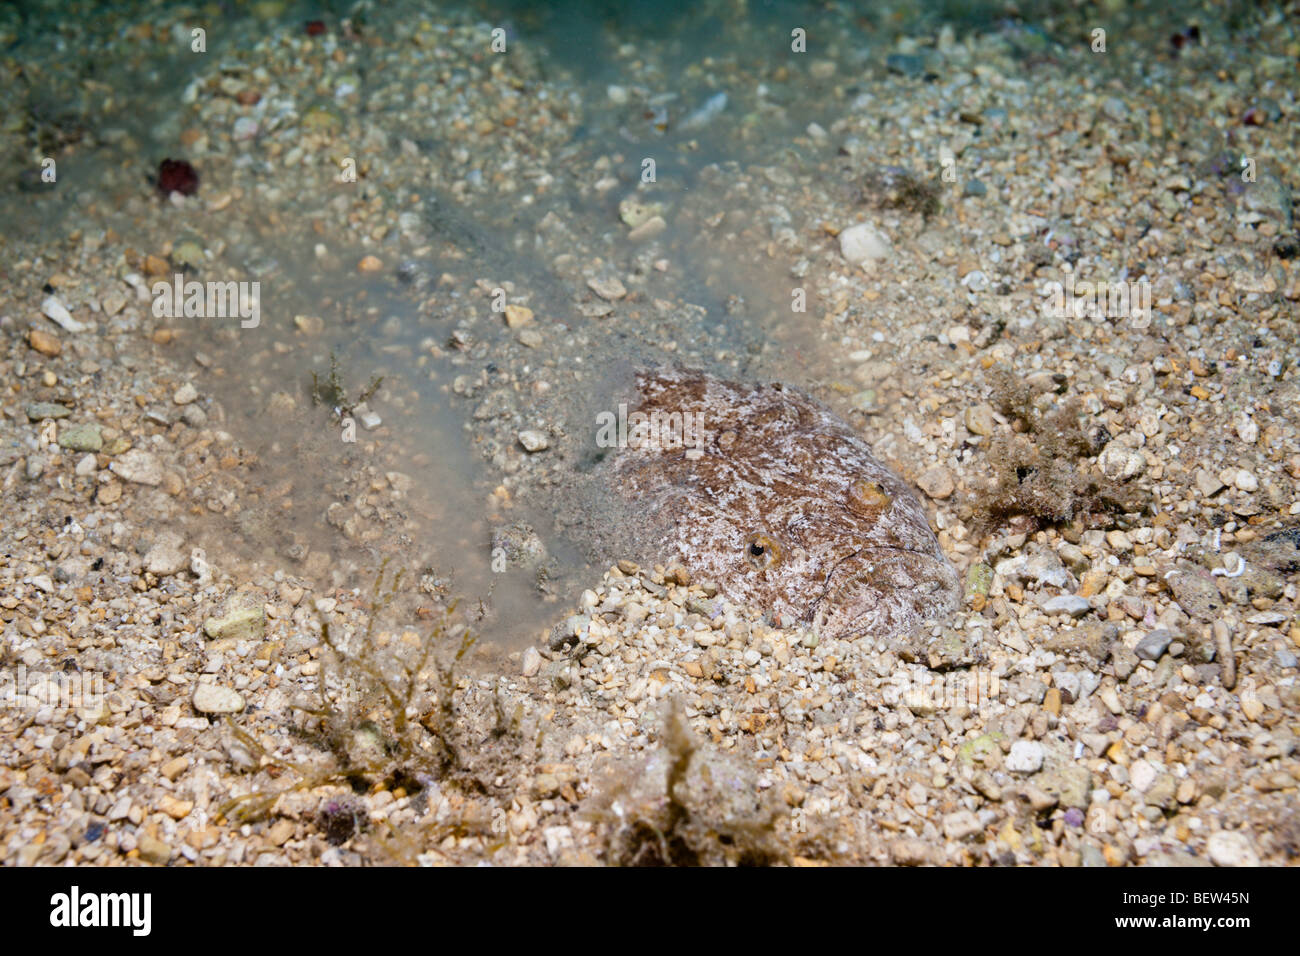 Star Gazer hiding in Sand, Uranoscopus scaber, Istria, Adriatic Sea, Croatia Stock Photo